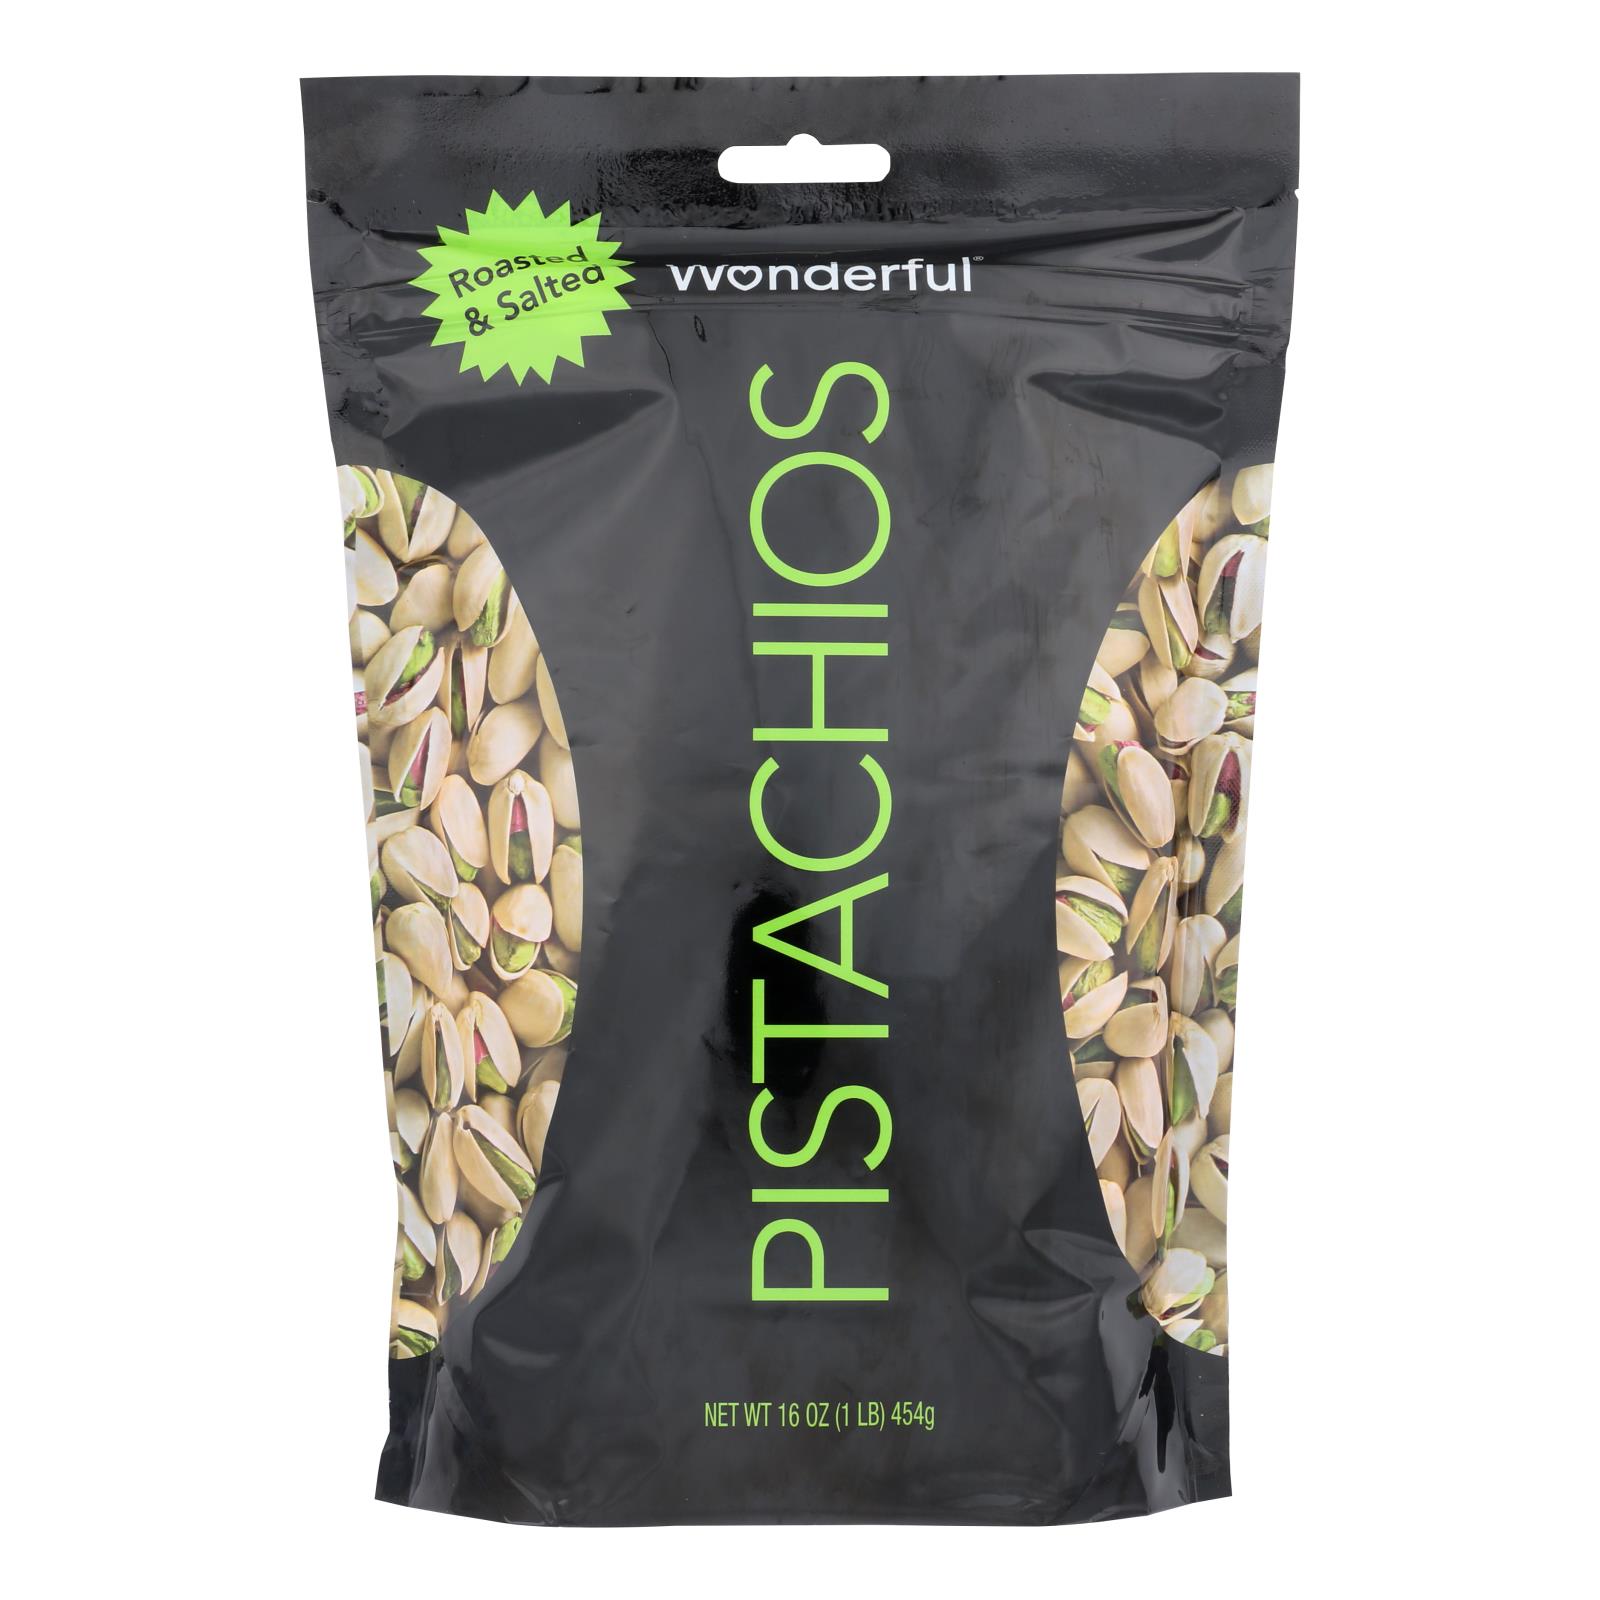 Wonderful Pistachios - Pistachios Roasted Salted - 12개 묶음상품 - 16 OZ